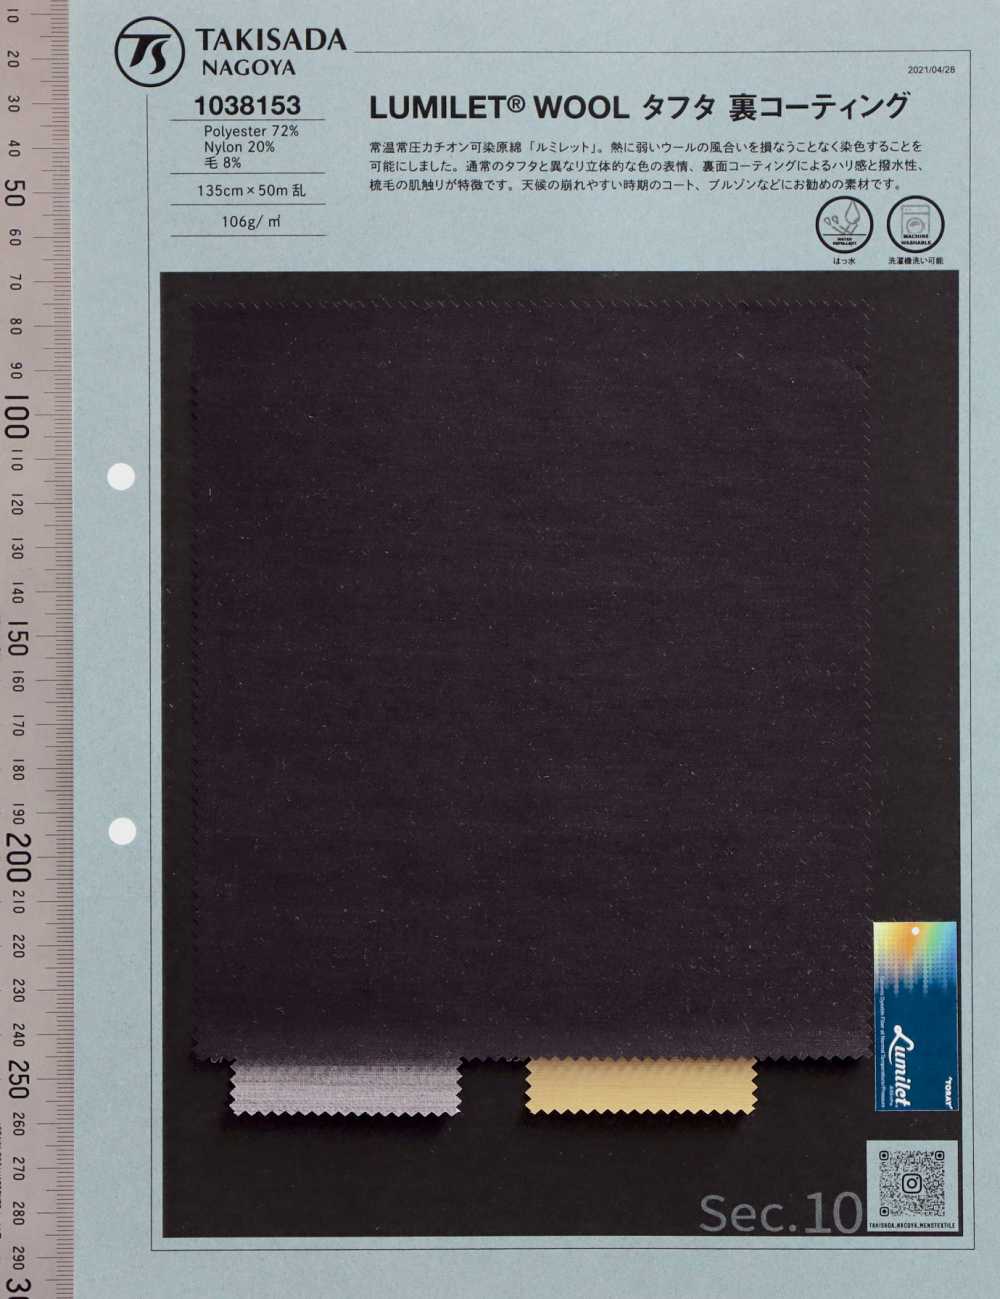 1038153 LUMILET WOOL Taft-Rückenbeschichtung[Textilgewebe] Takisada Nagoya